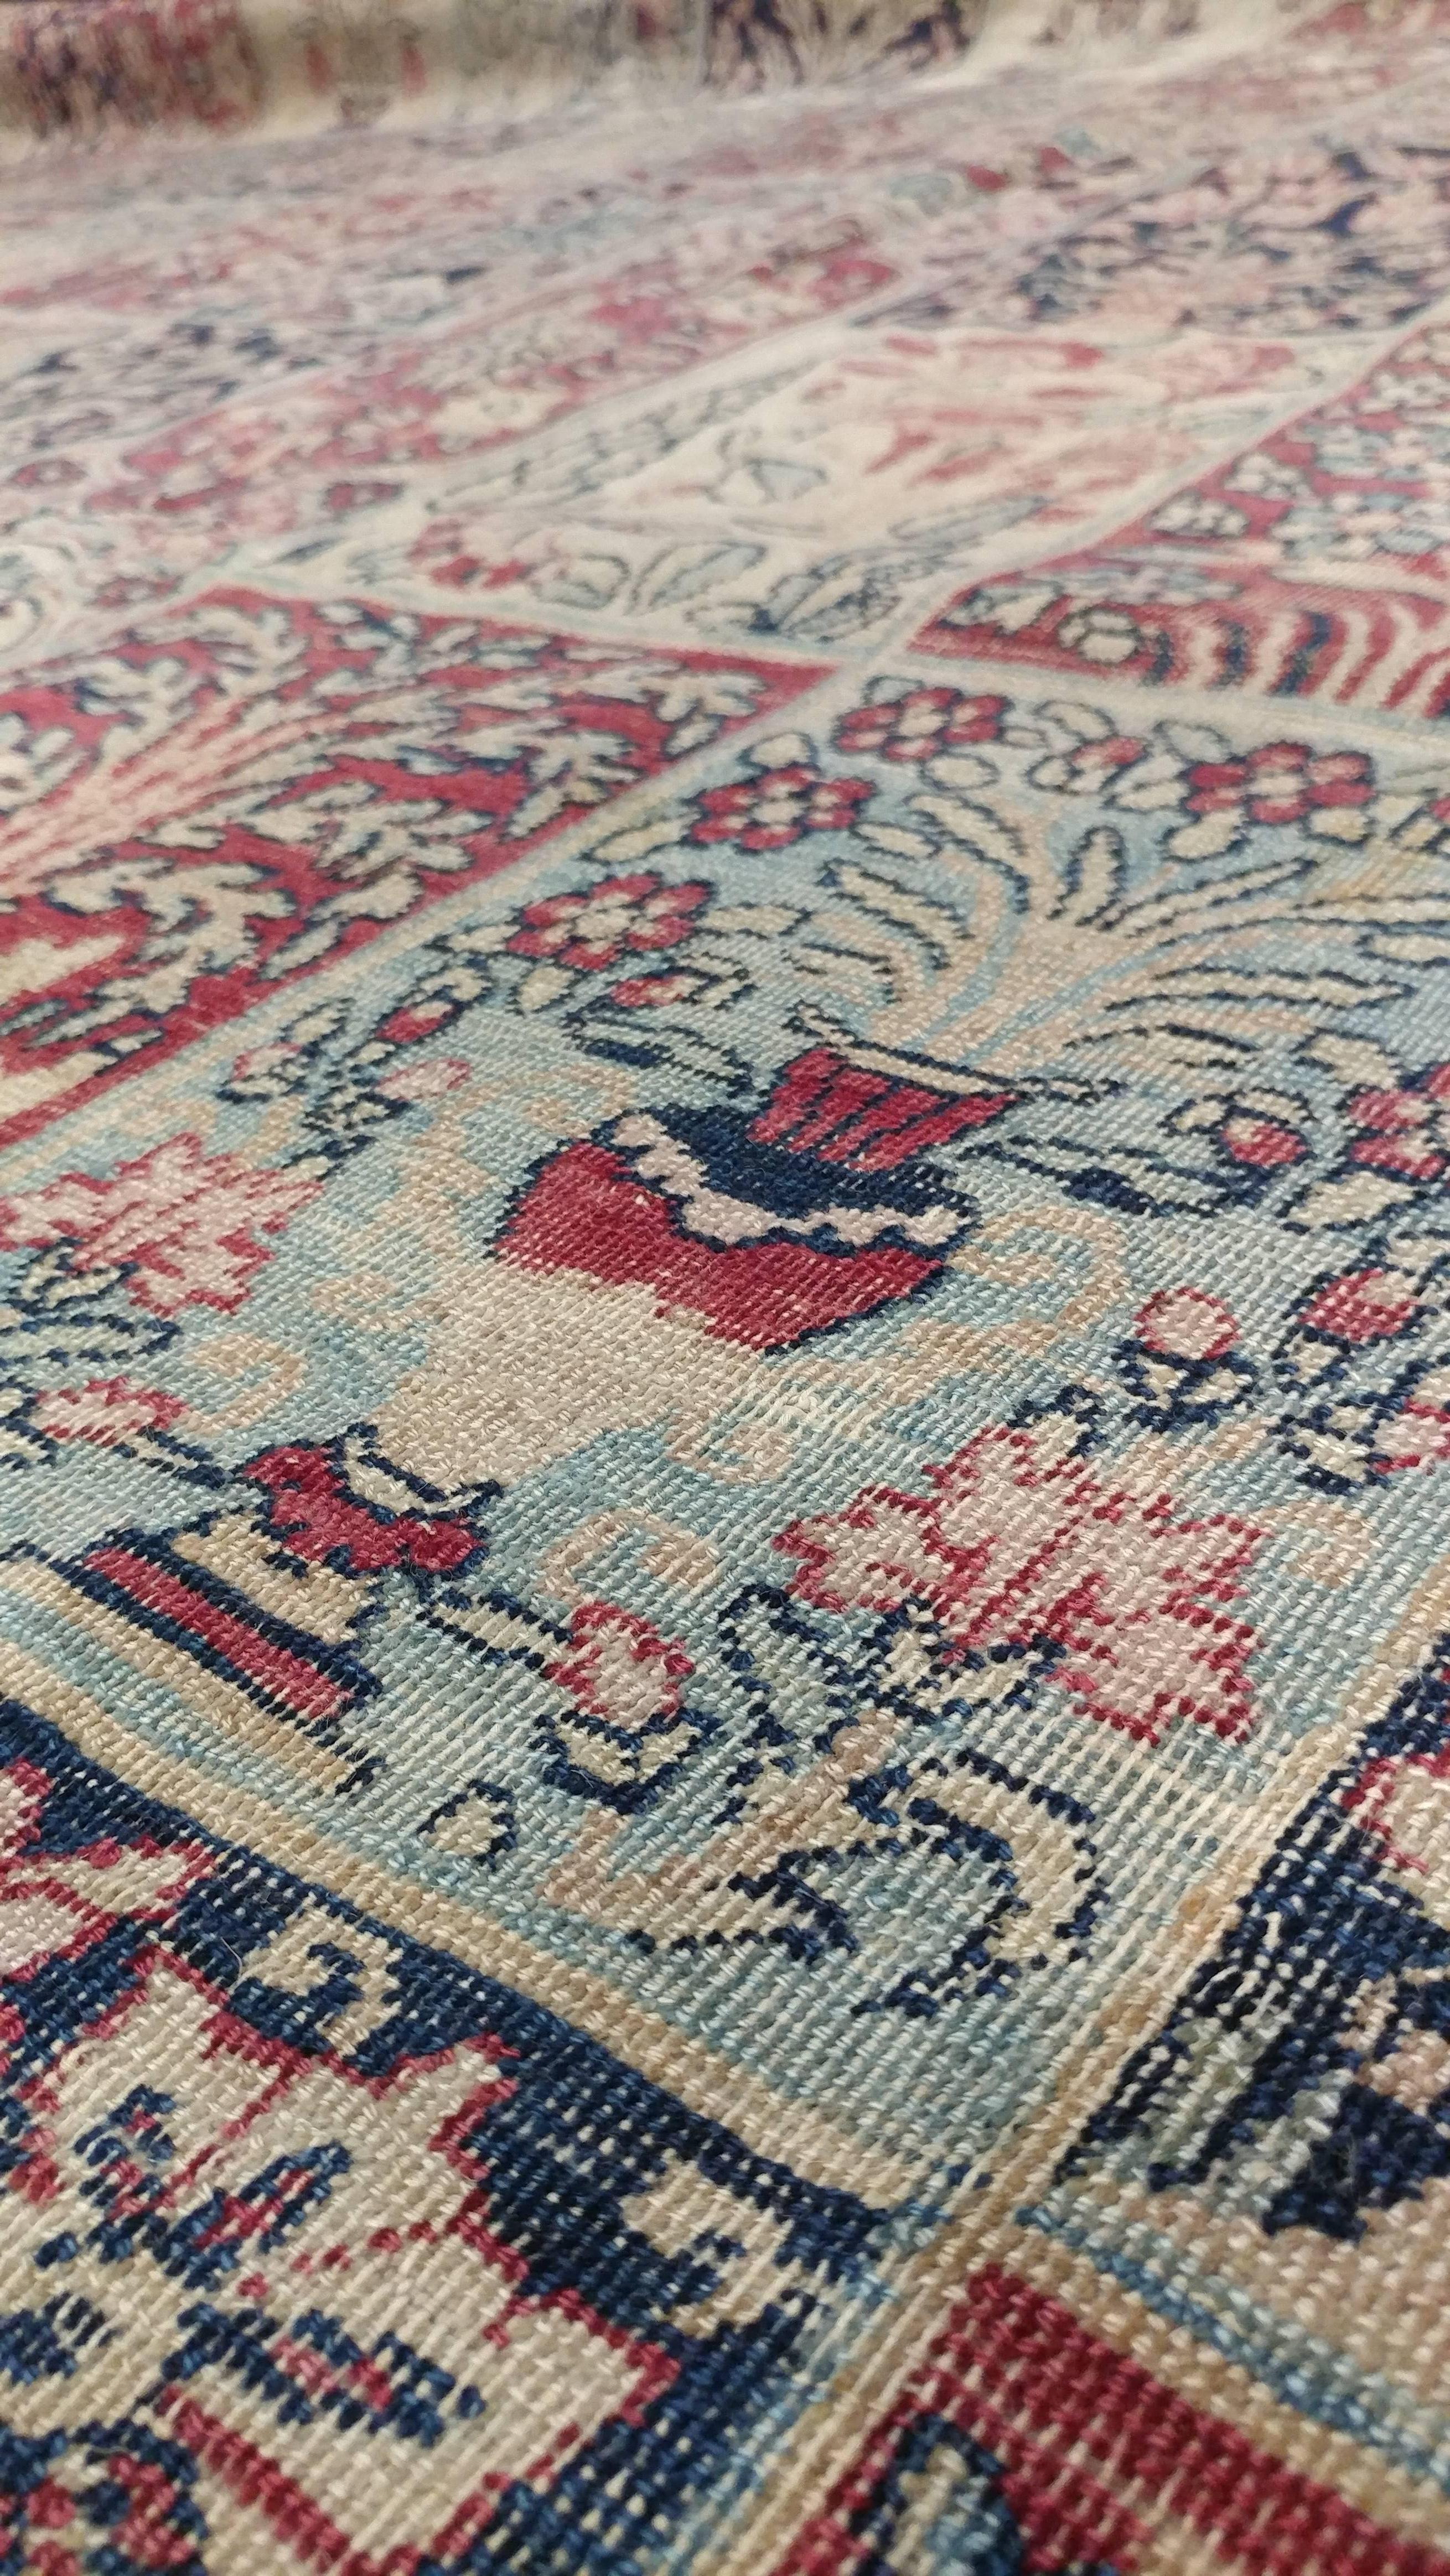 19th Century Antique Lavar Kerman Carpet, Handmade Wool Carpet, Multi-Color, Ivory, Red Wine For Sale